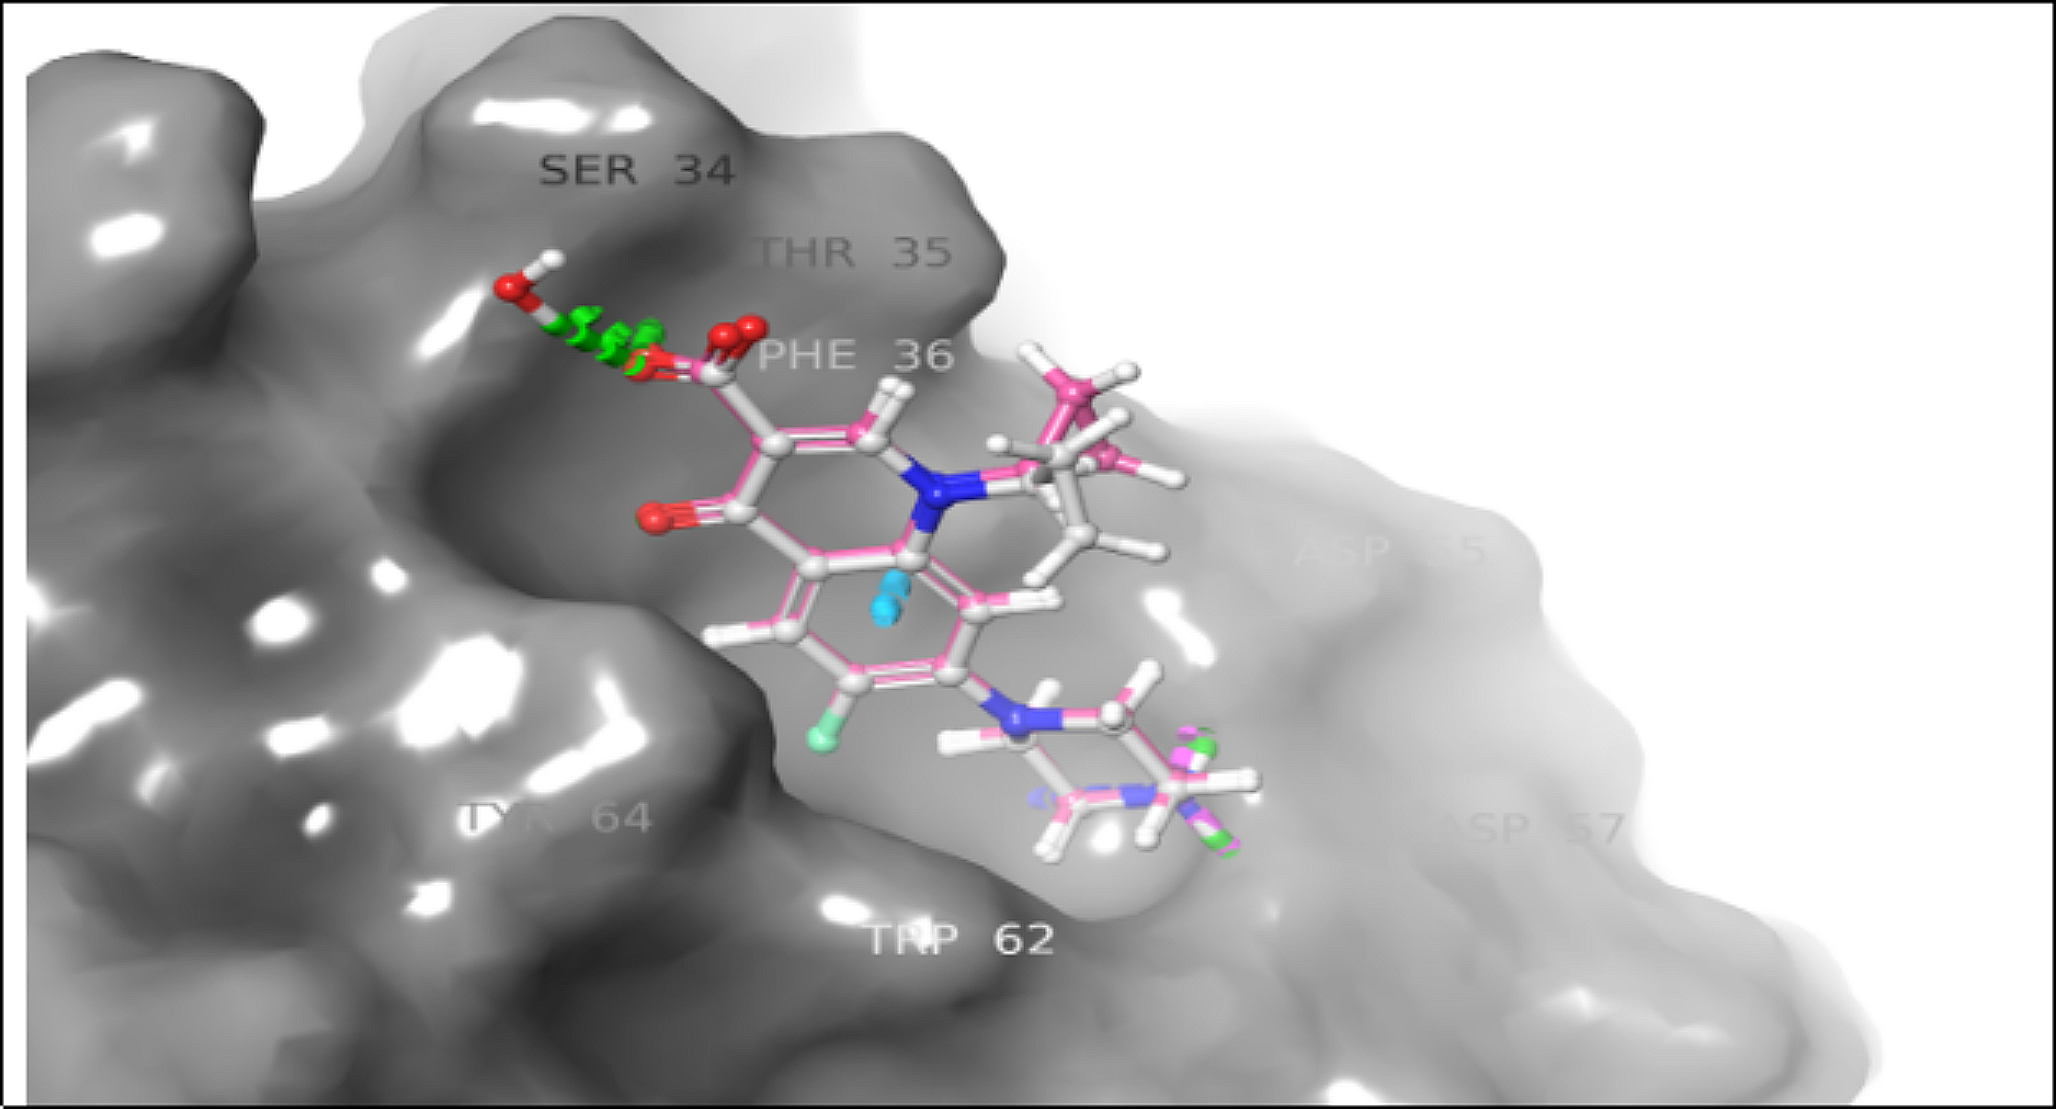 Fragment-based drug design of novel inhibitors targeting lipoprotein (a) kringle domain KIV-10-mediated cardiovascular disease